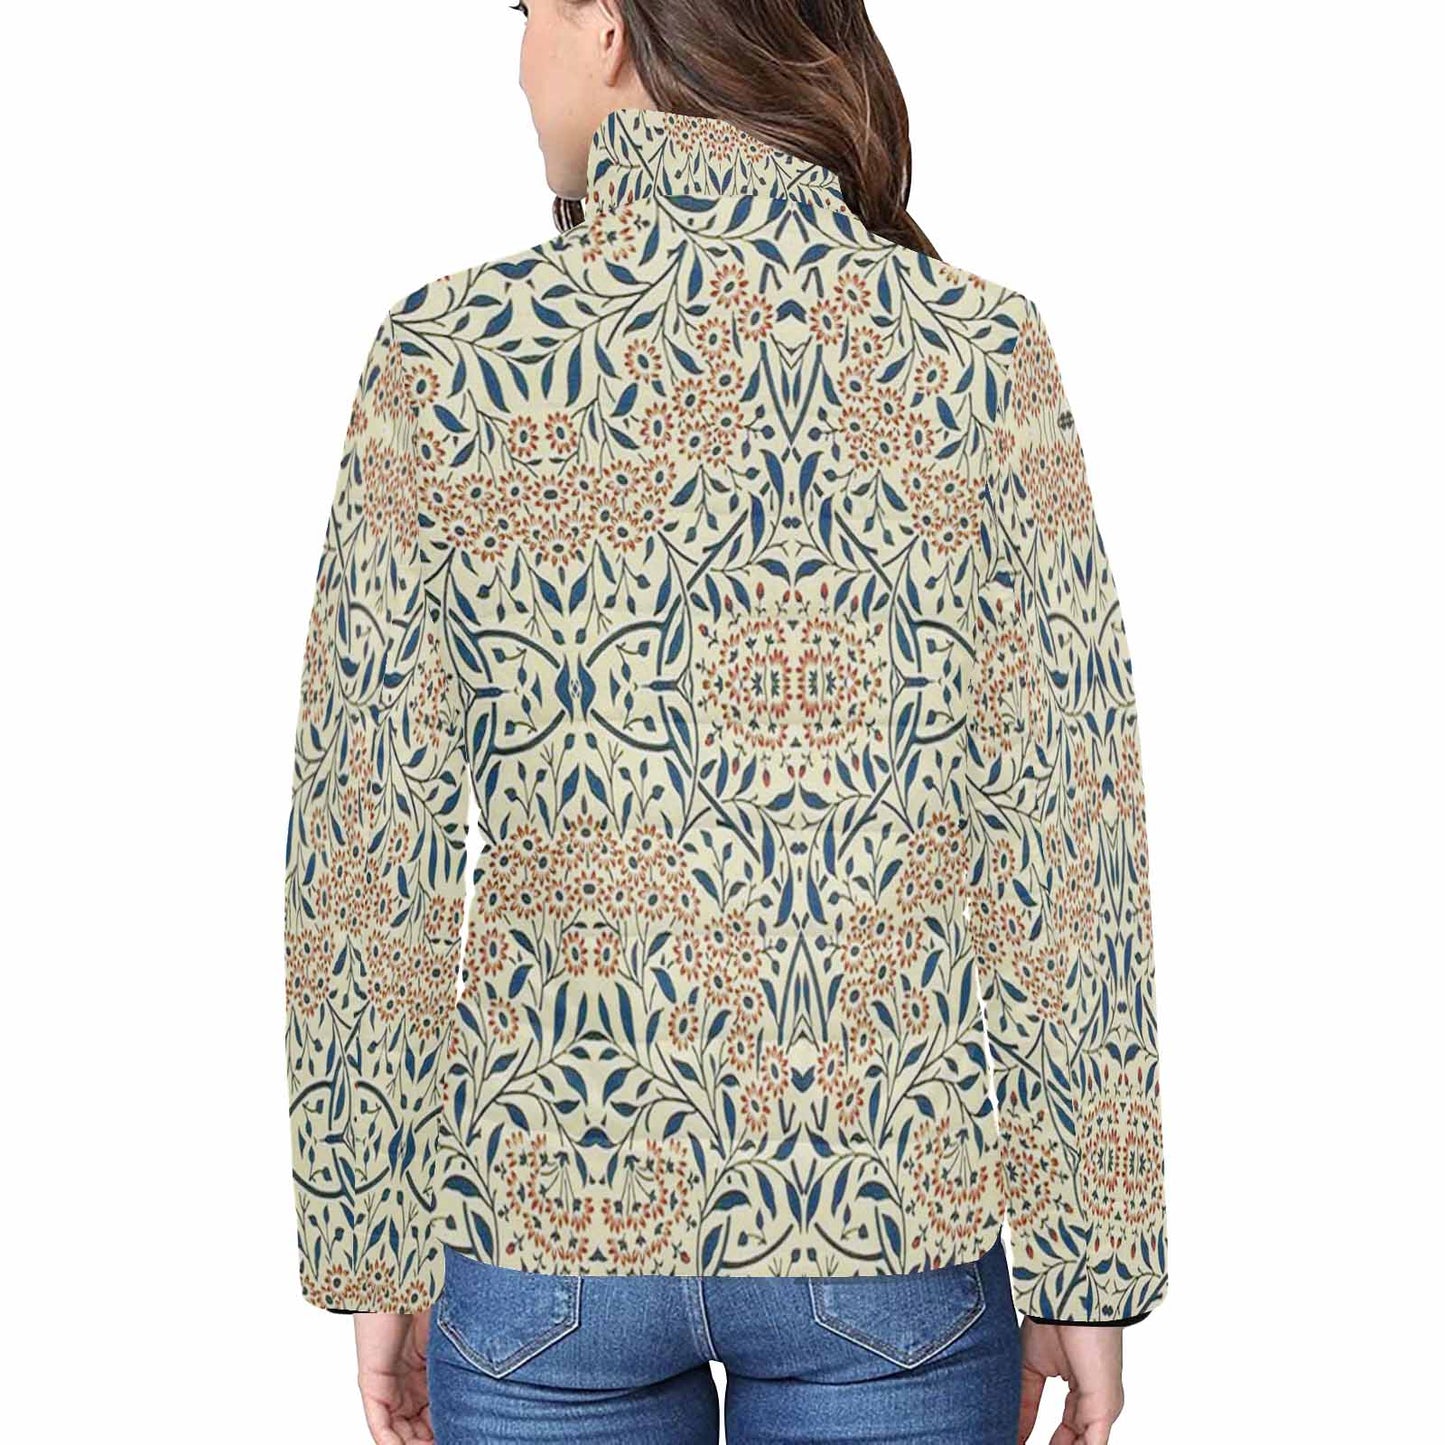 Antique general print quilted jacket, design 02